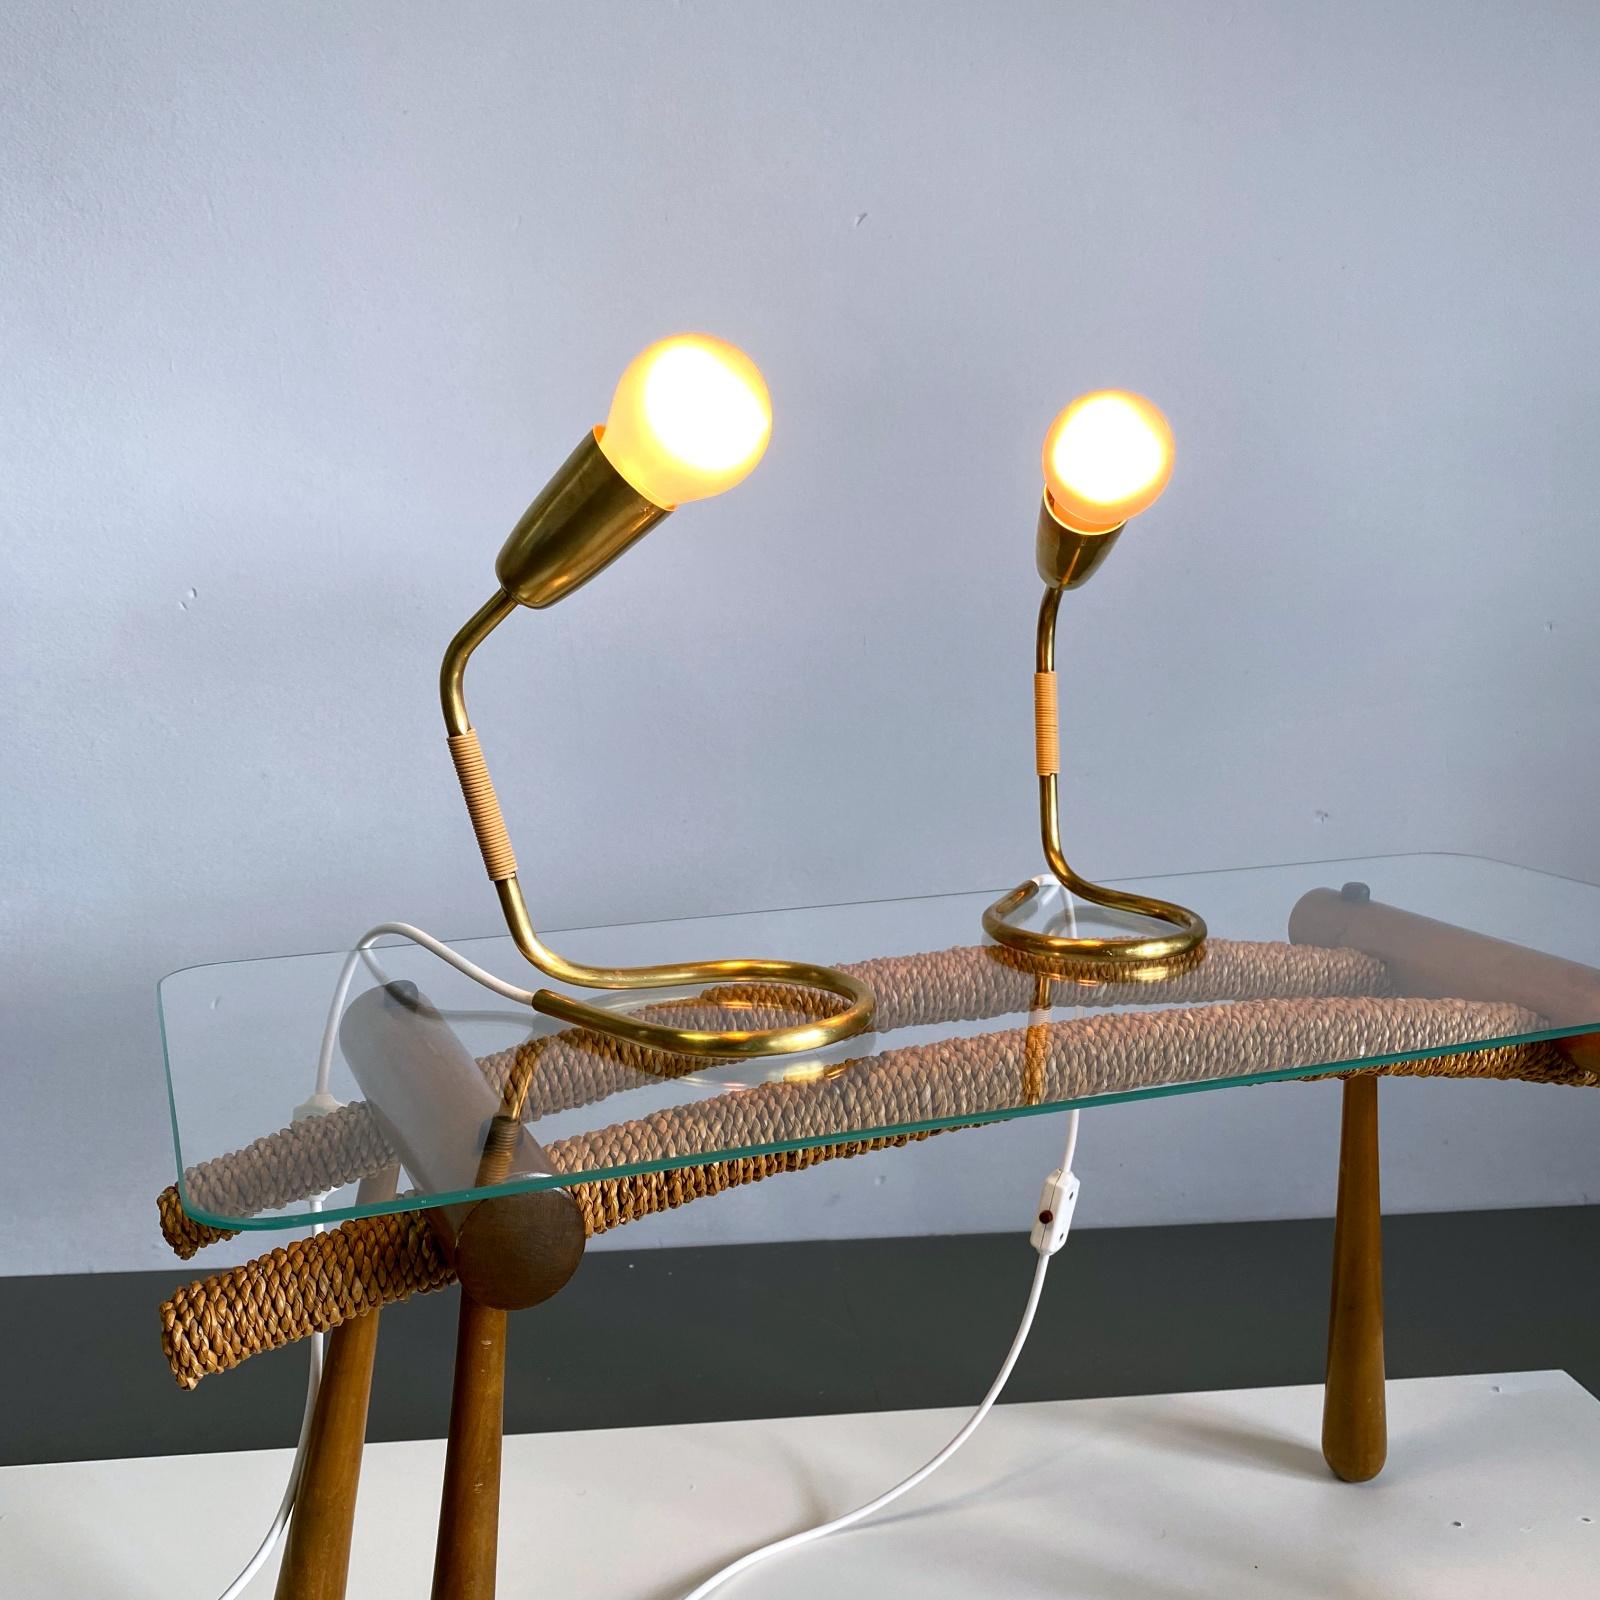 Metalwork Pair of Midcentury Rupert Nikoll Brass Nightstand Table Lamps, 1950s, Austria For Sale